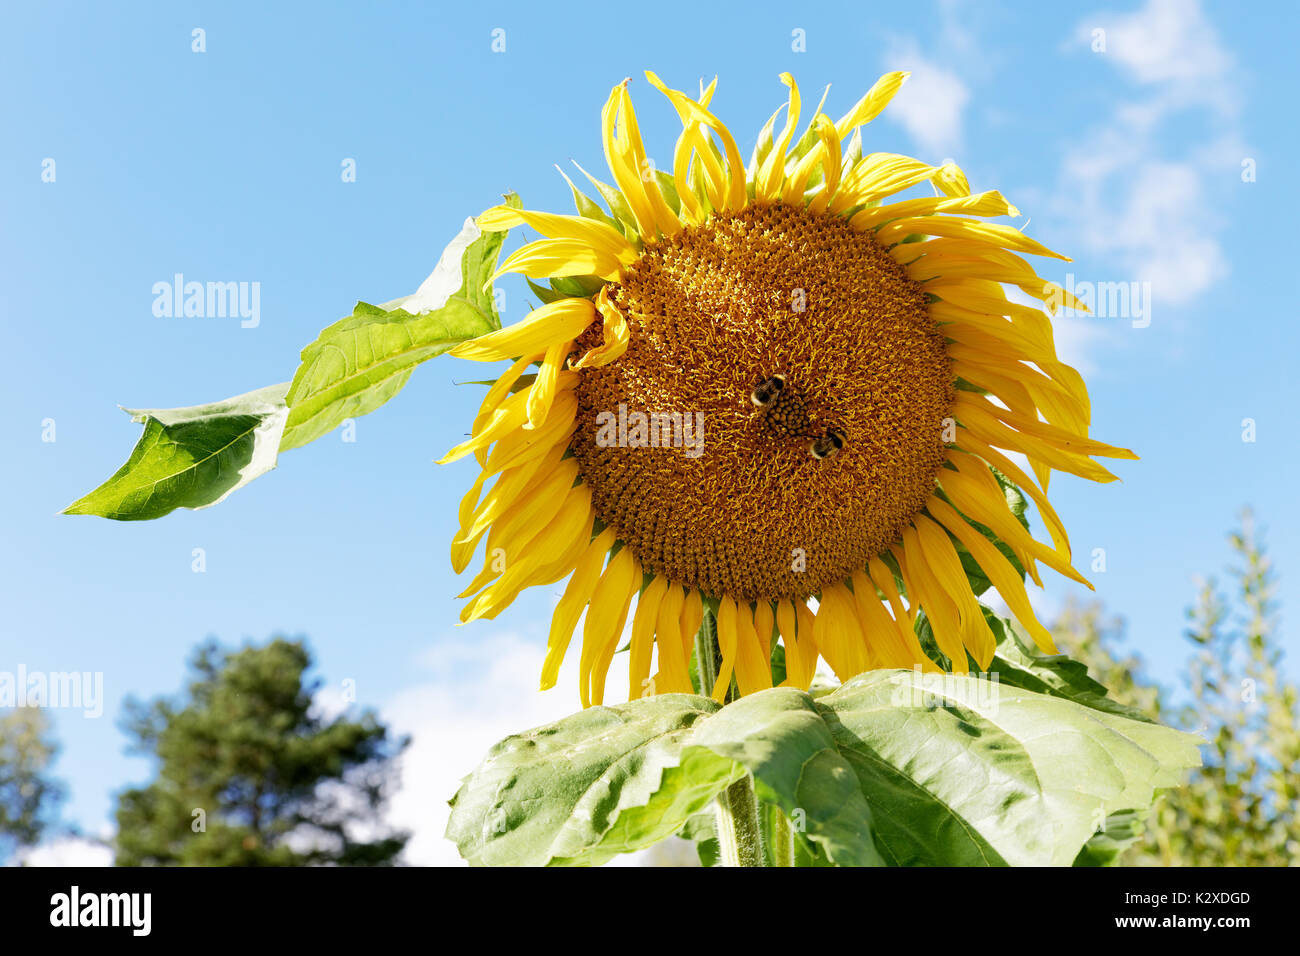 Yellow sunflower flower close-up summer day Stock Photo